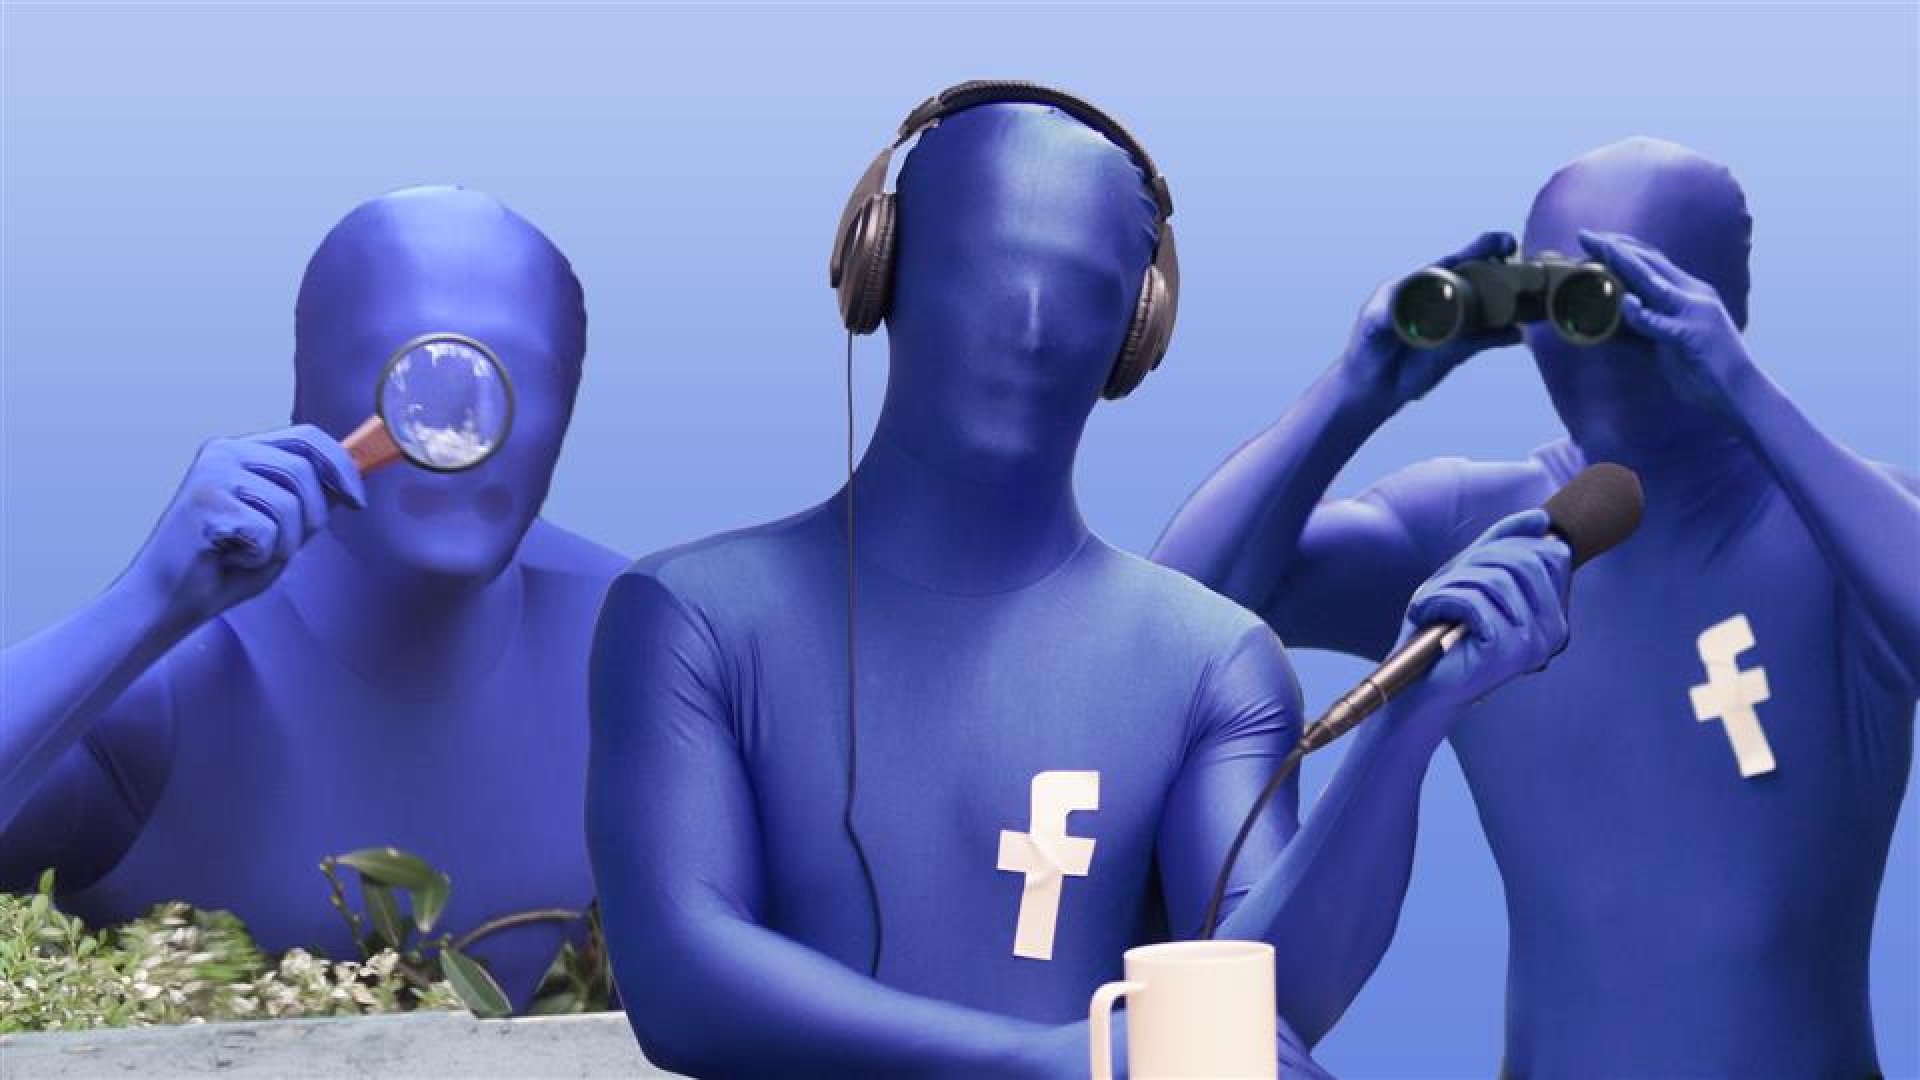  Facebook е записвал разговори на потребителите си  - E-Burgas.com